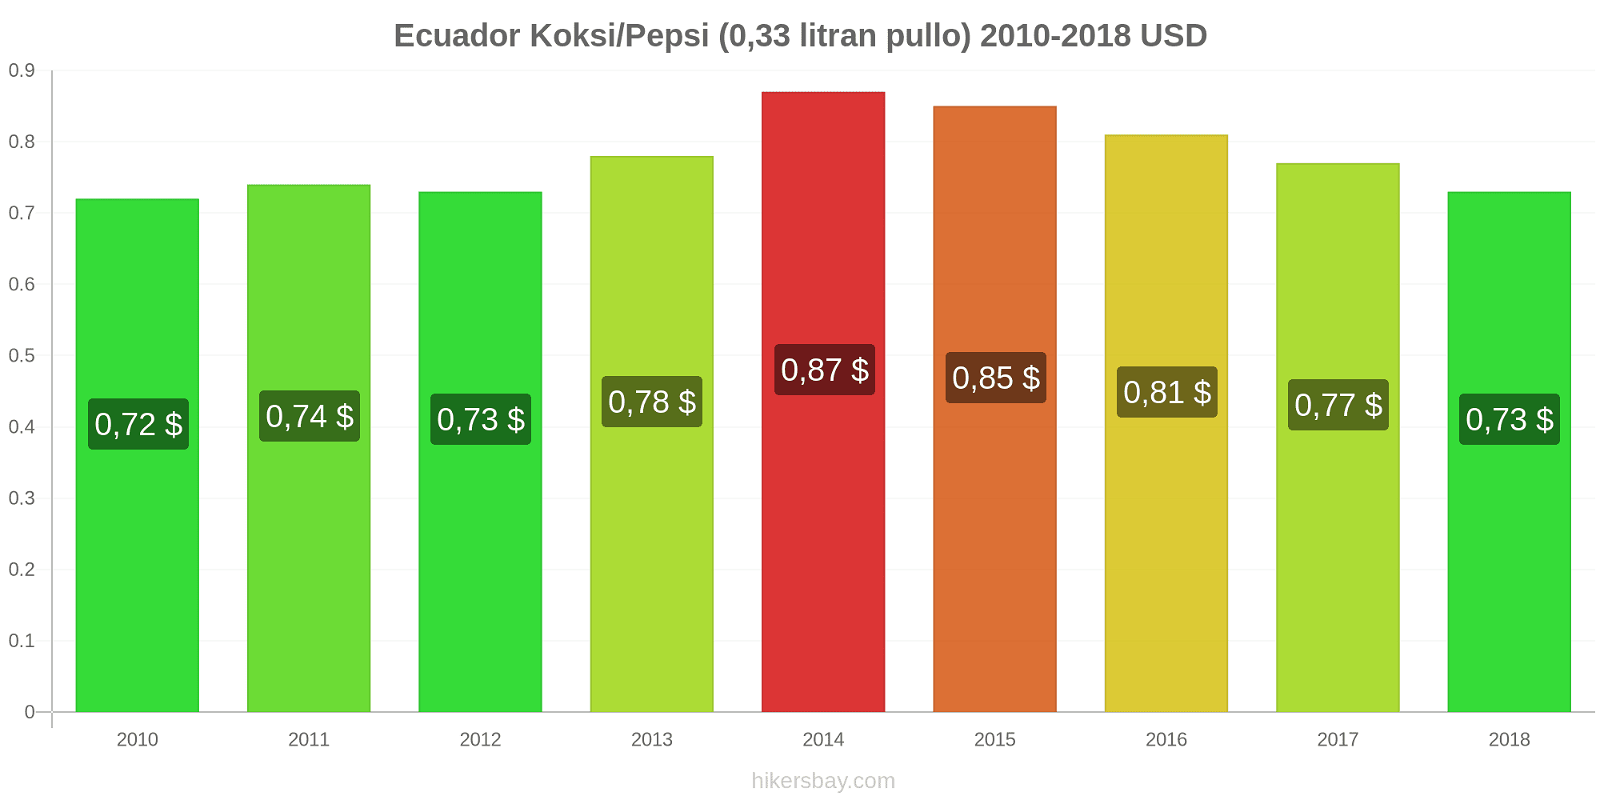 Ecuador hintojen muutokset Koksi/Pepsi (0,33 litran pullo) hikersbay.com